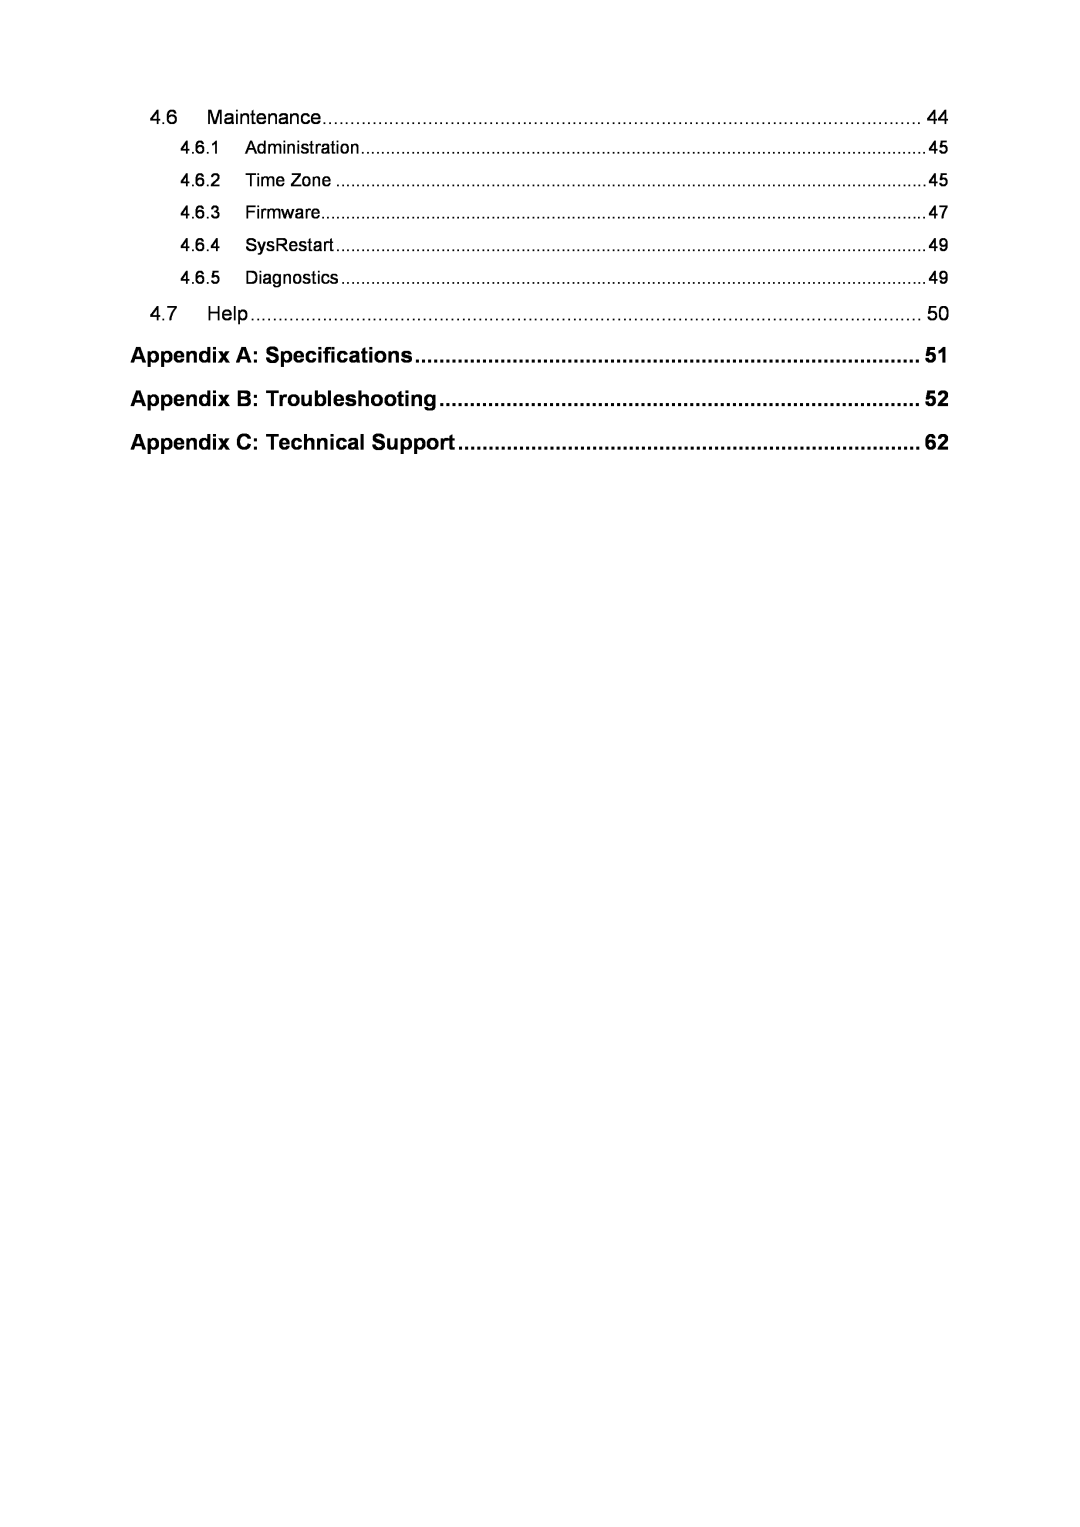 TP-Link TD-8816 Appendix A Specifications, Appendix B Troubleshooting, Appendix C Technical Support, 4.6.1, 4.6.2, 4.6.3 